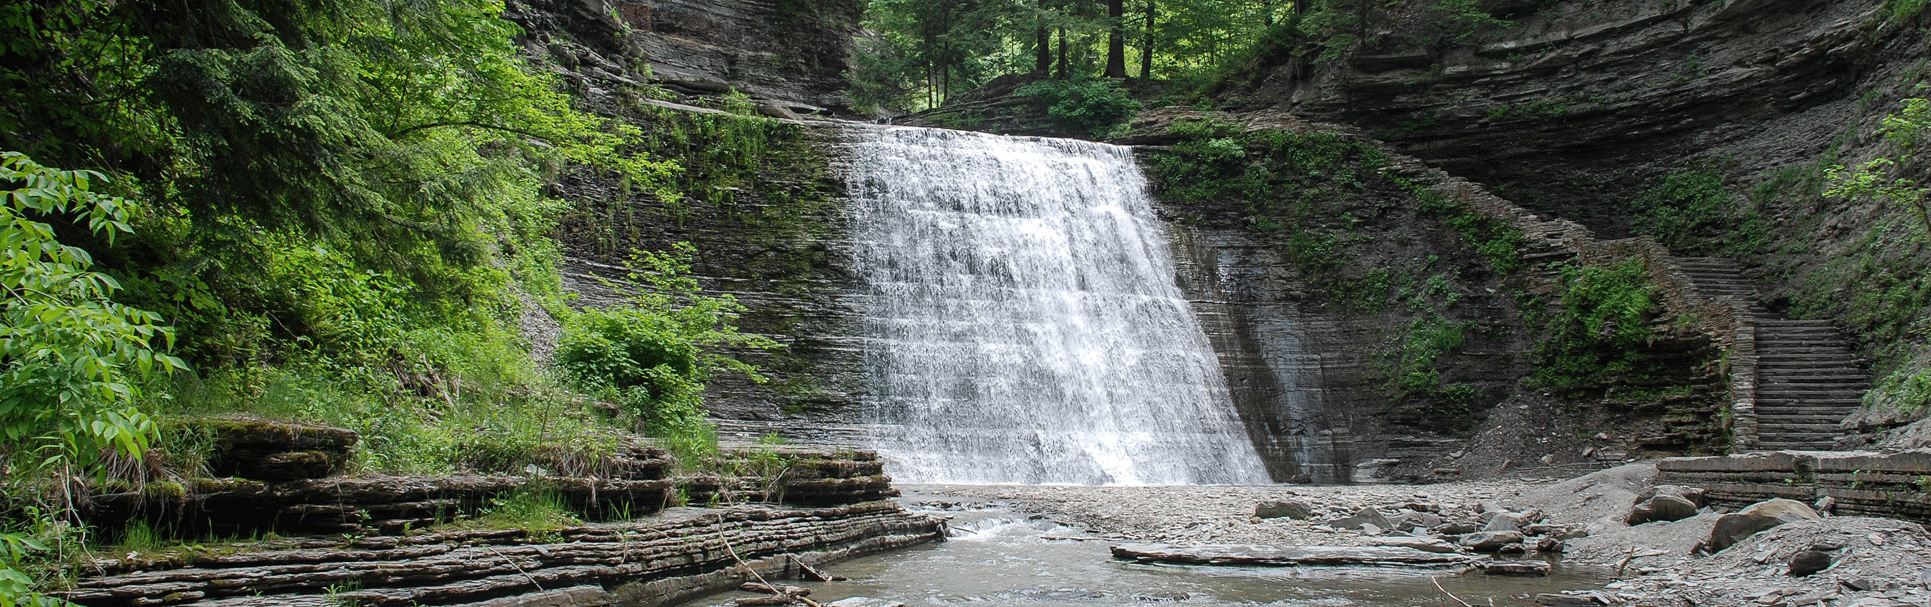 Waterfall in Stony Brook, Long Island